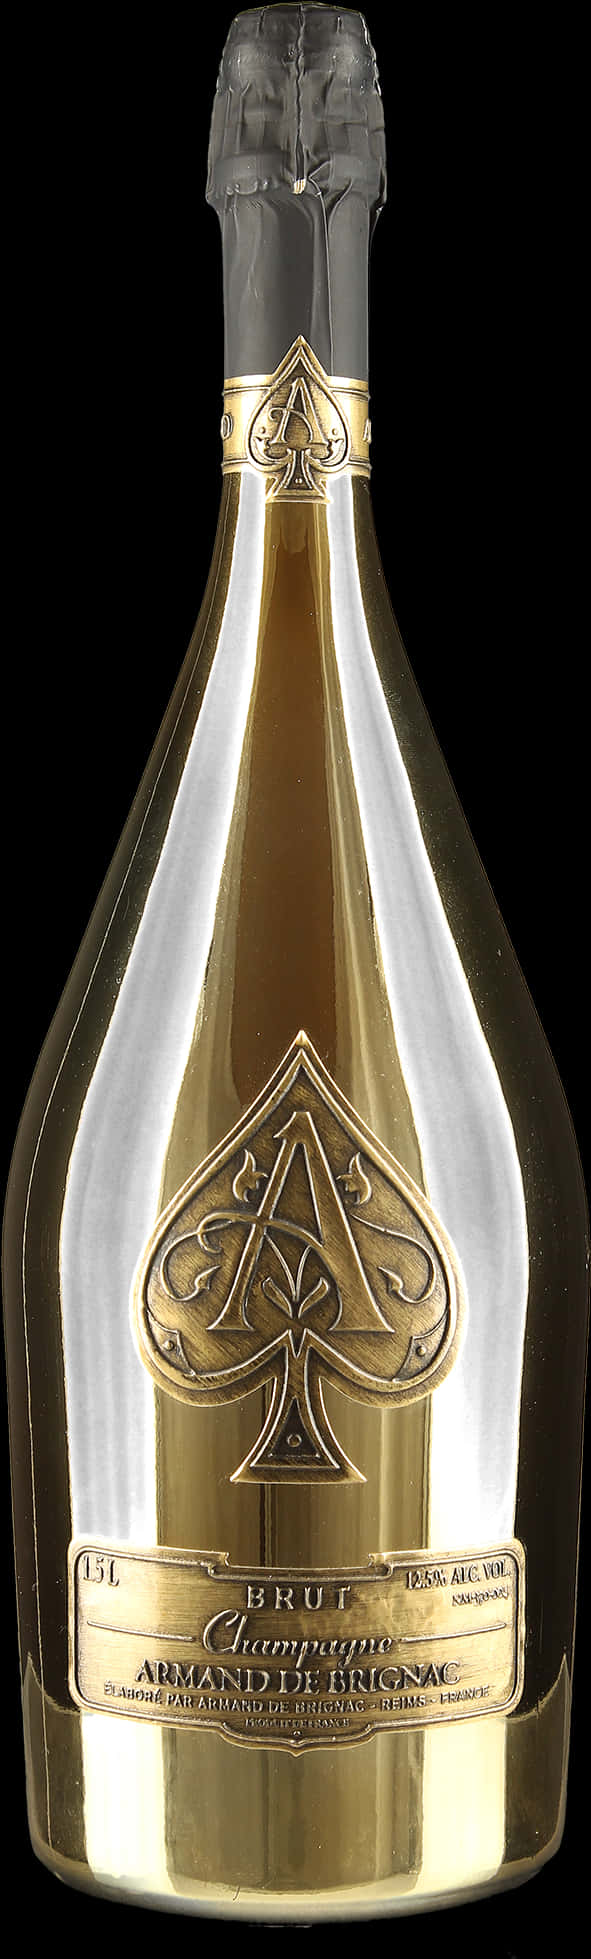 A Close-up Of A Bottle